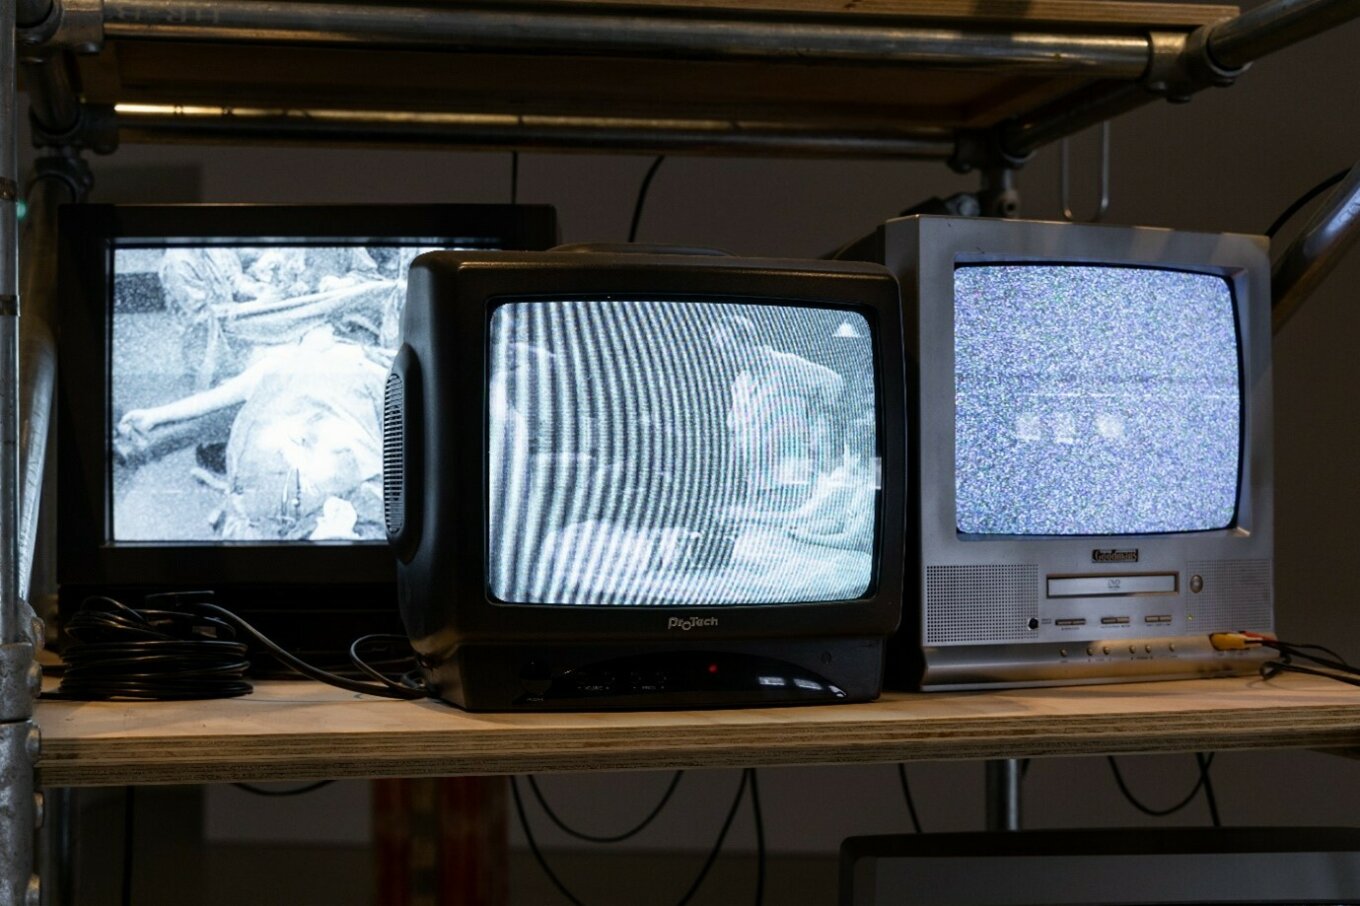 Three television sets on a shelf